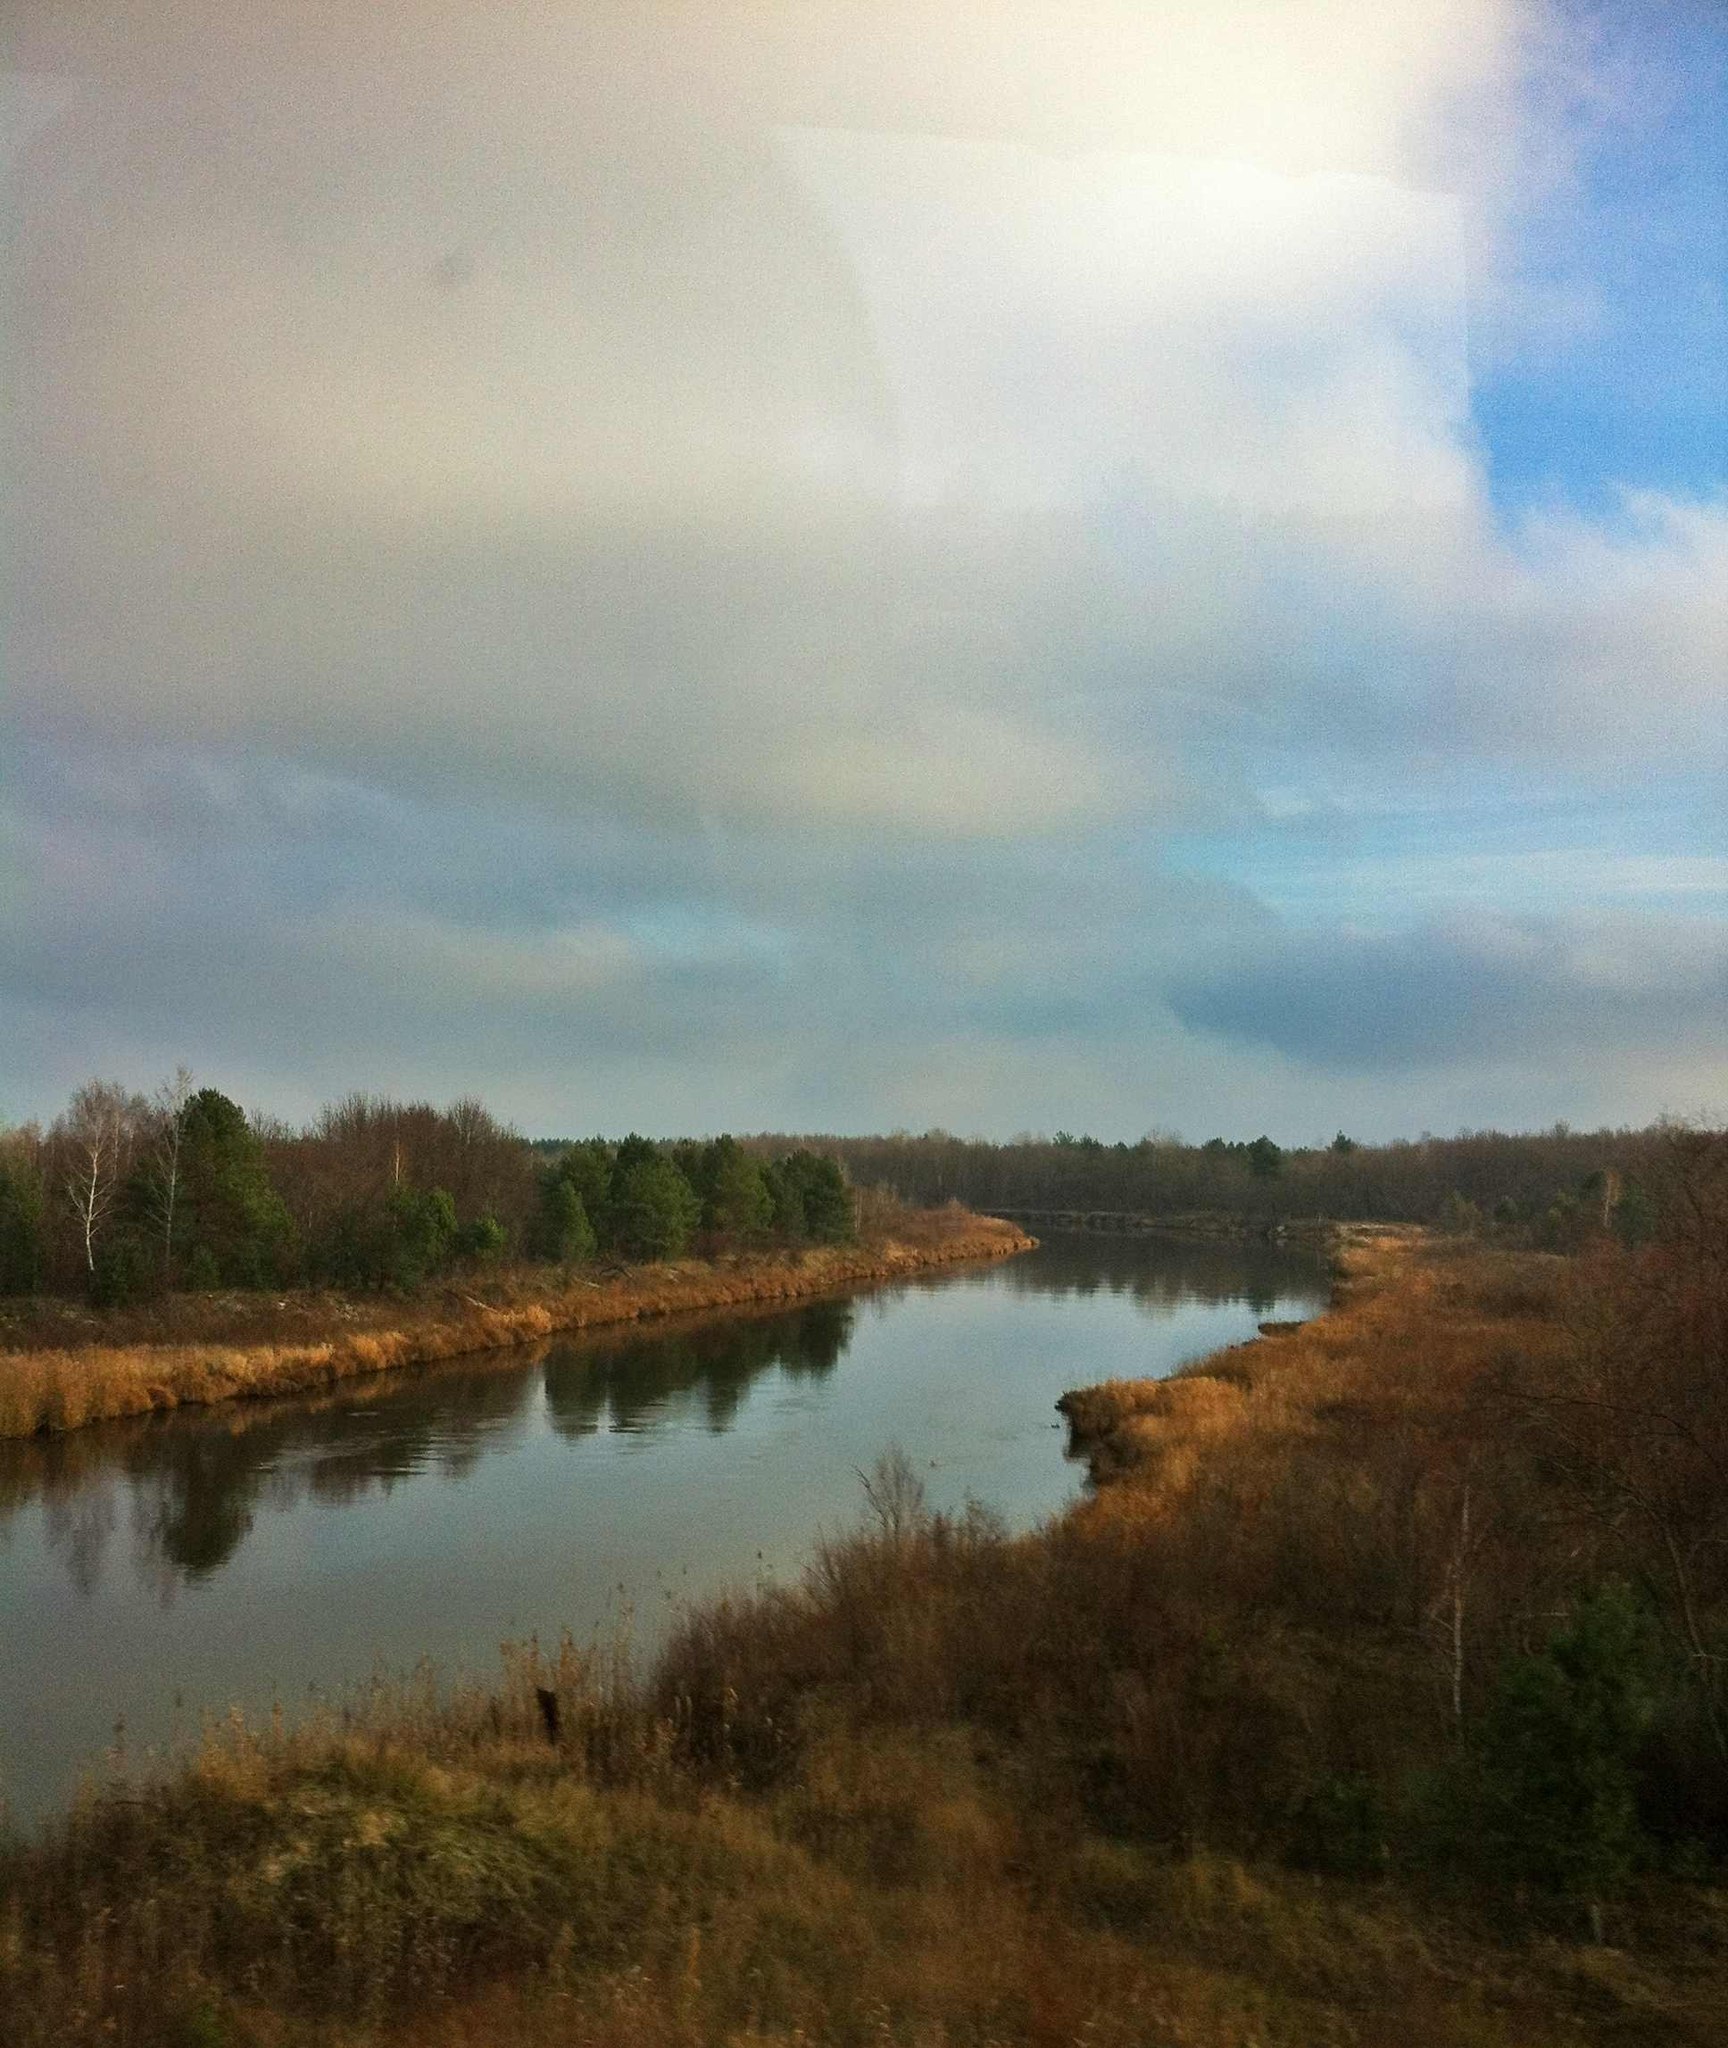  Oh River near Chernobyl 